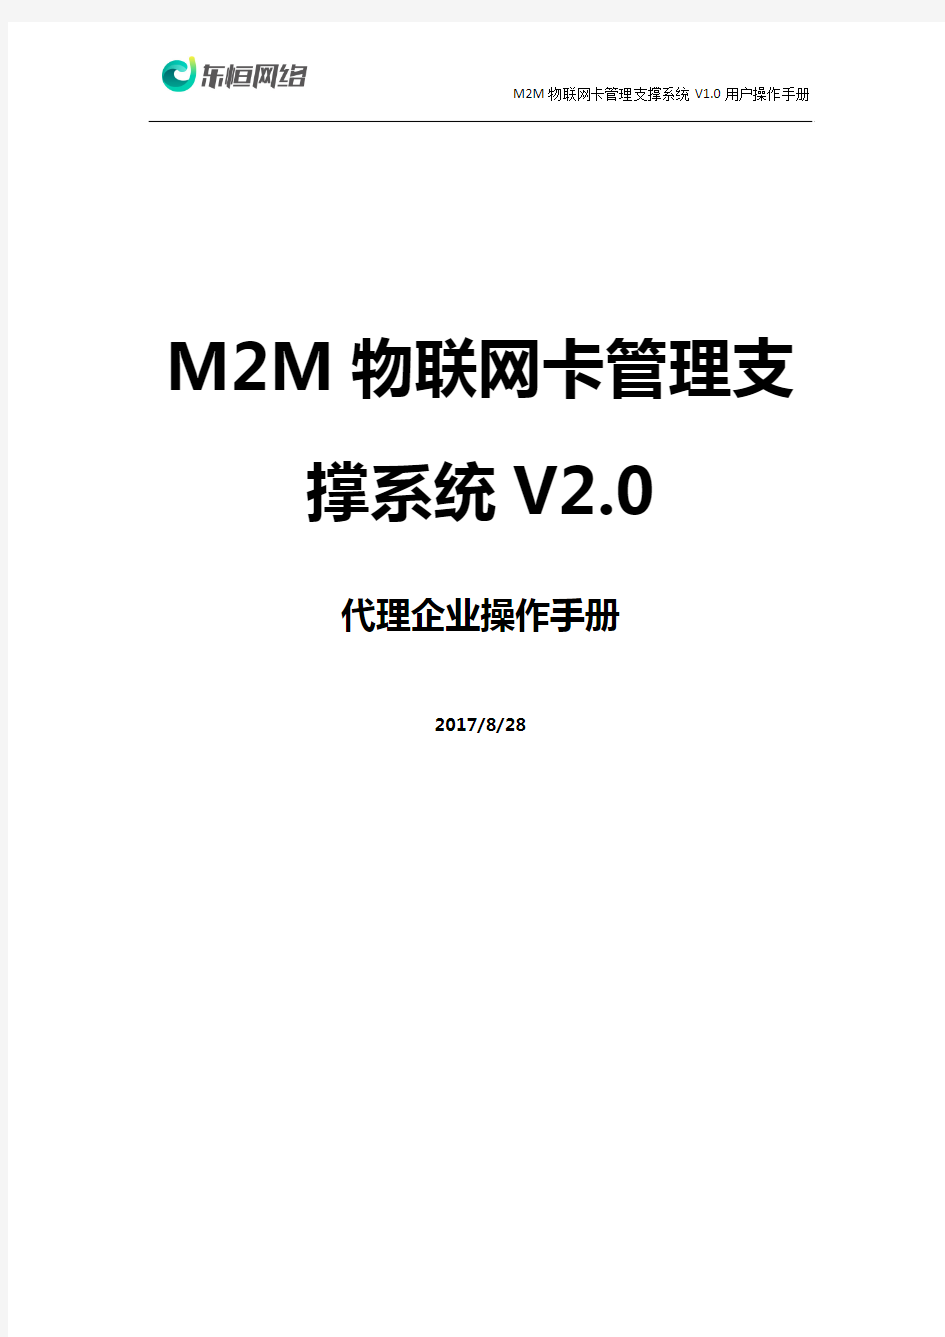 M2M物联网卡管理支撑系统V2.0操作手册(代理企业)